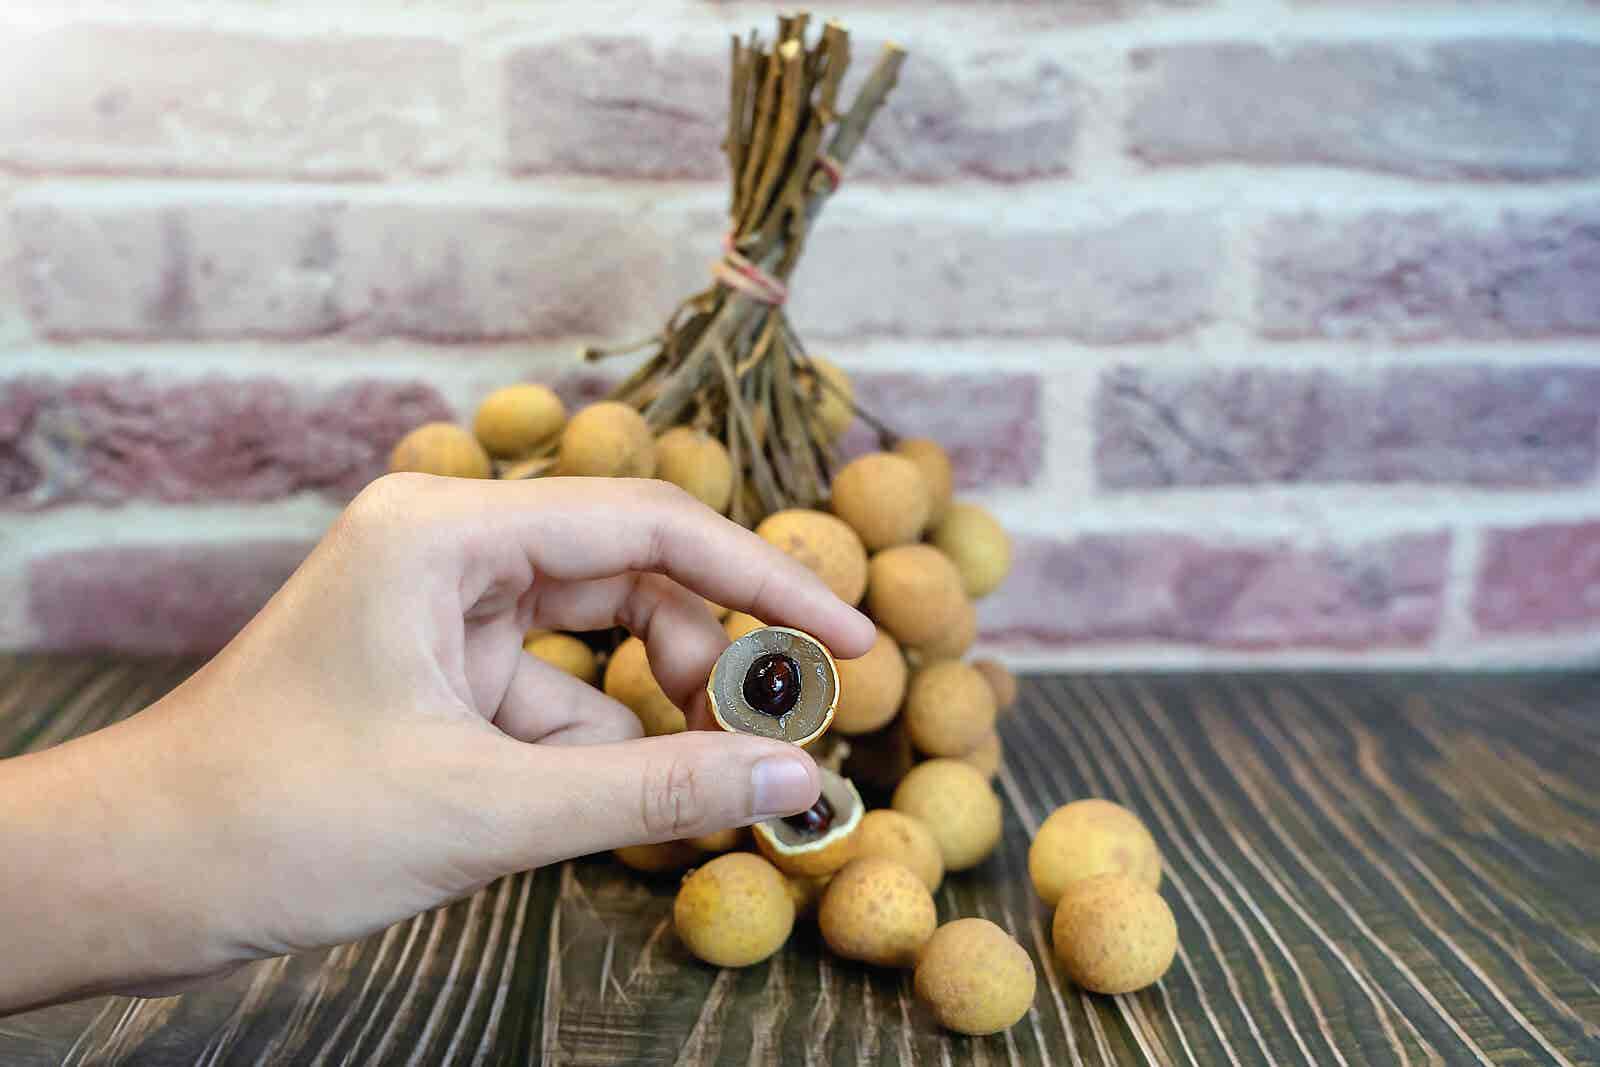 How to prepare the longan fruit?